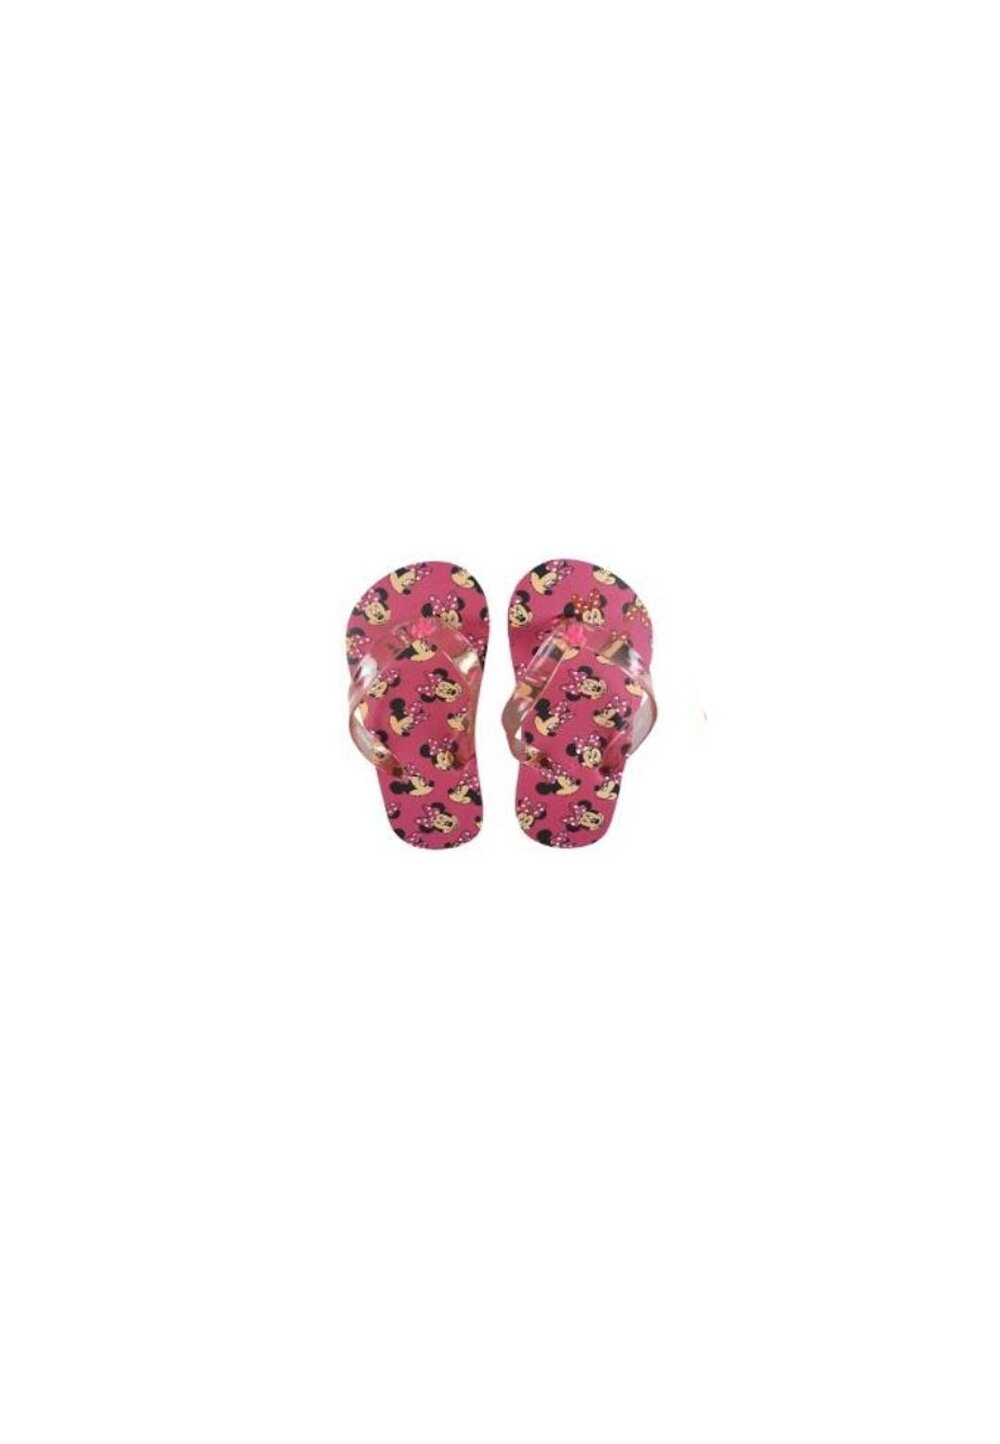 Papuci flip-flop, Minnie, roz cu figurine Disney